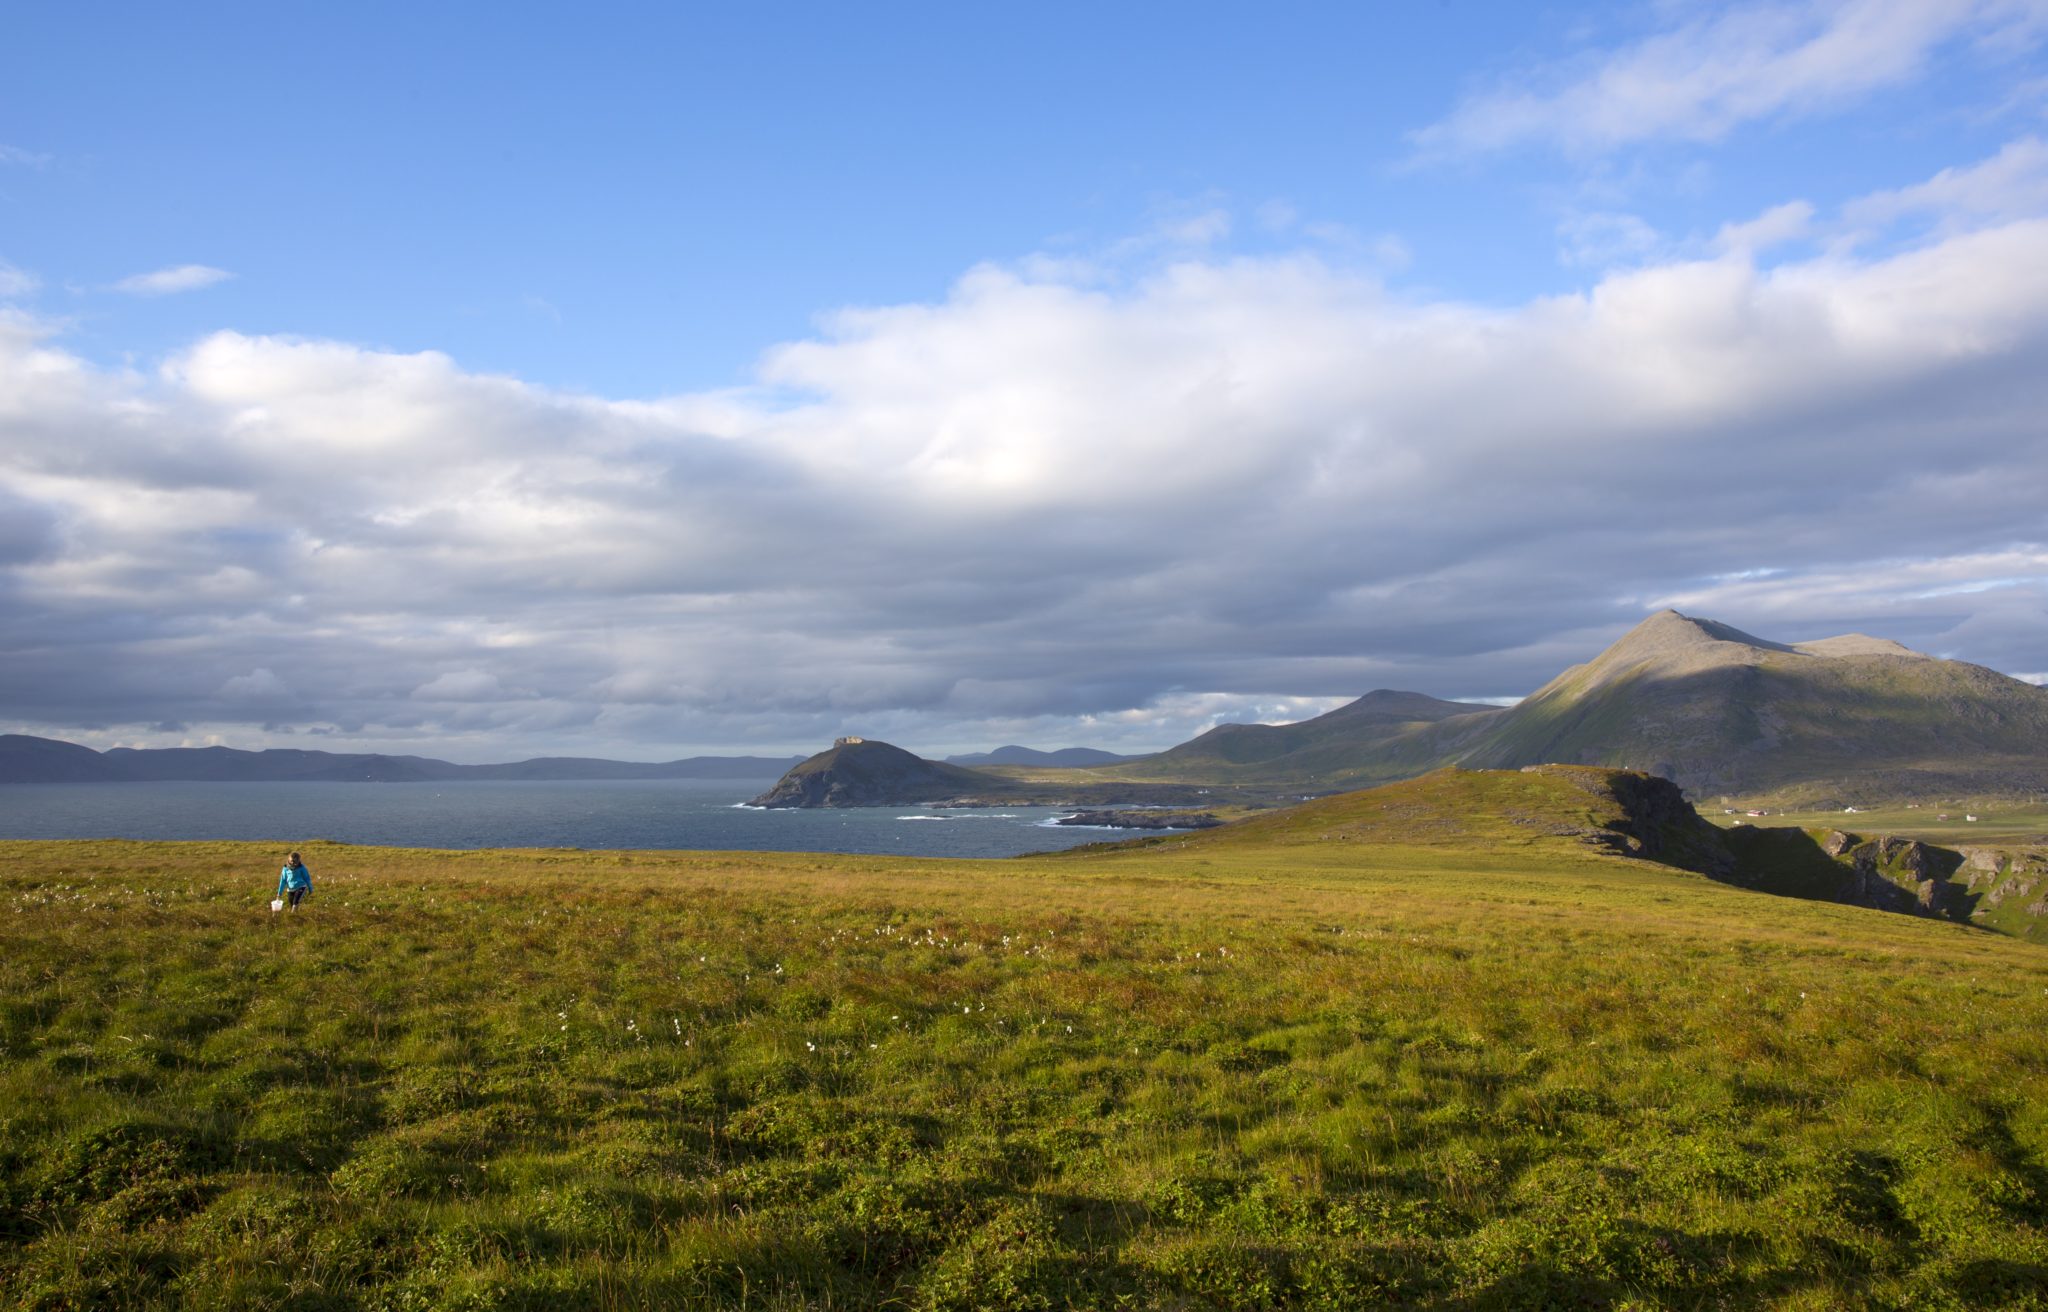 The Sørøya landscape is one of a fairytale © Anne Olsen Ryum